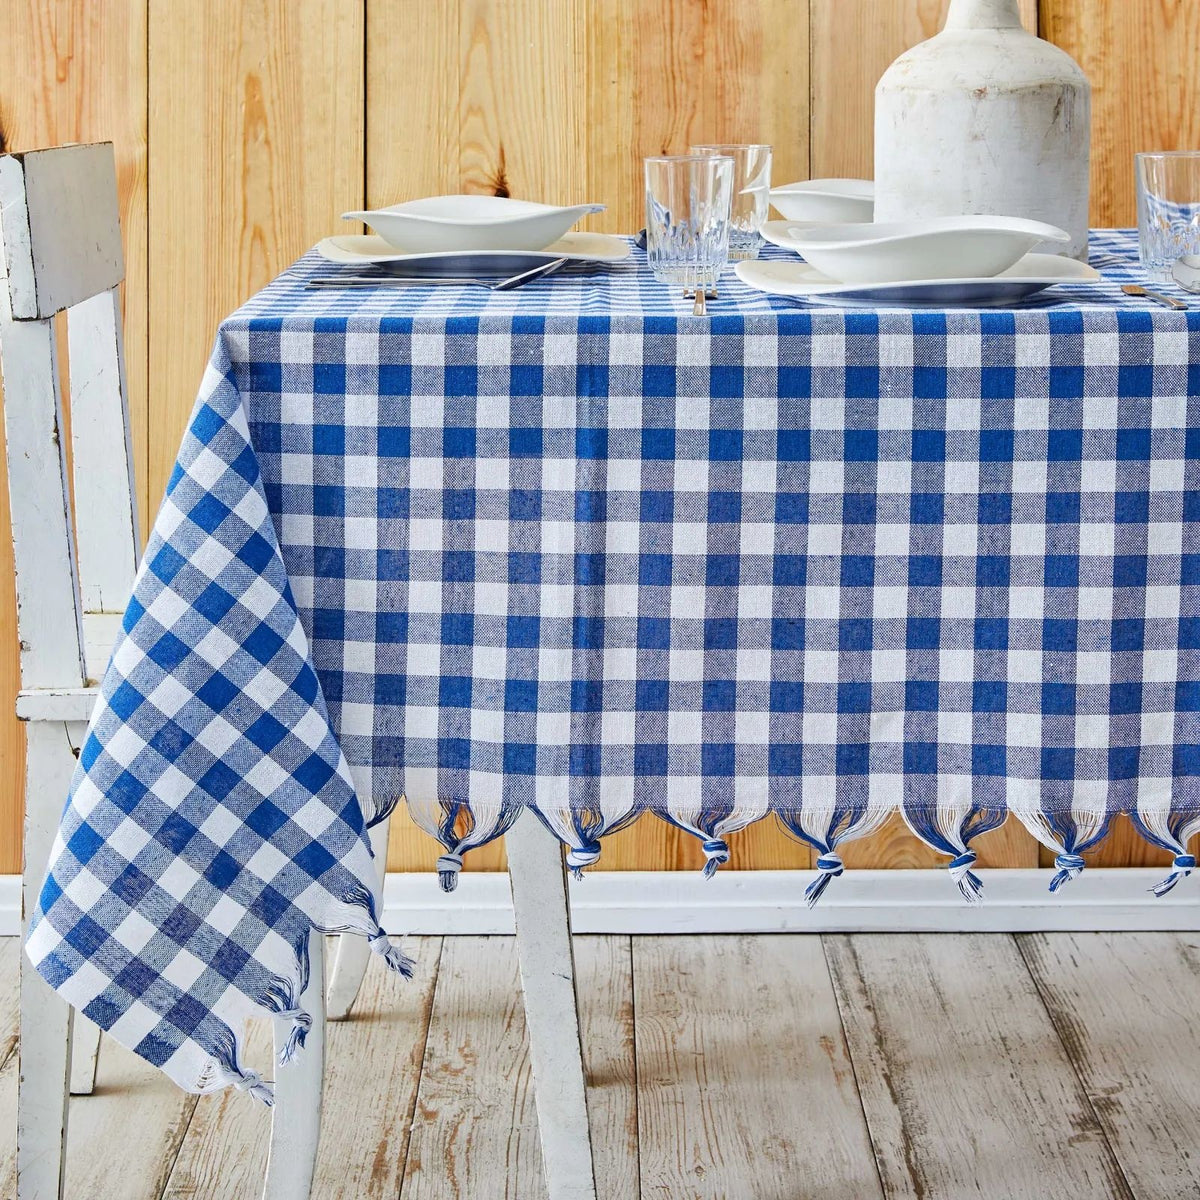 Sarah Anderson Square Blue Picnic Table Cloth 140x140 cm